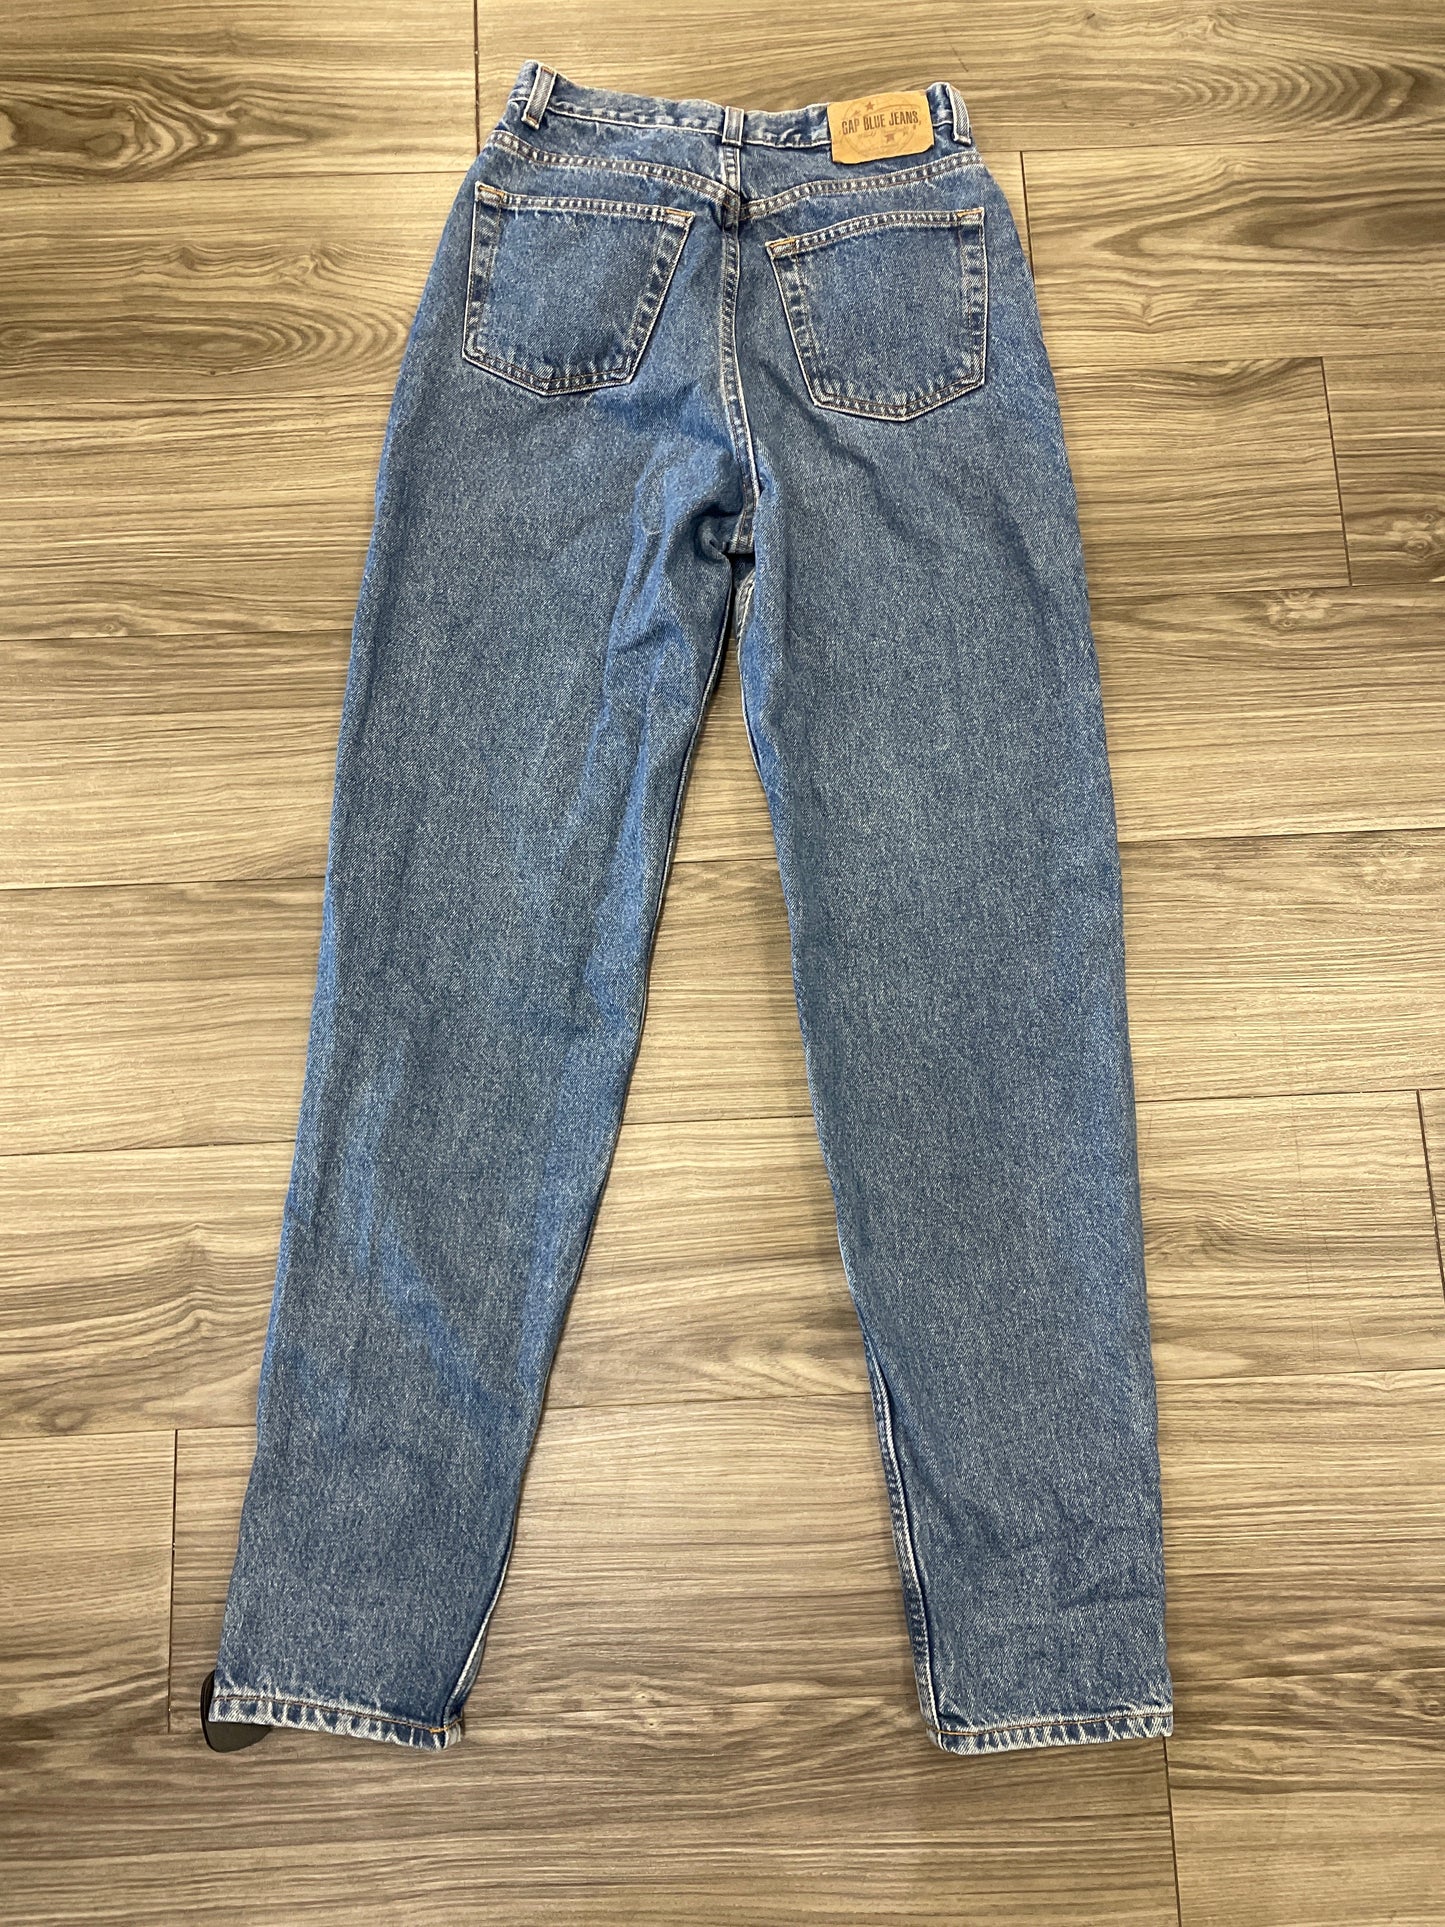 Blue Jeans Straight Gap, Size 8